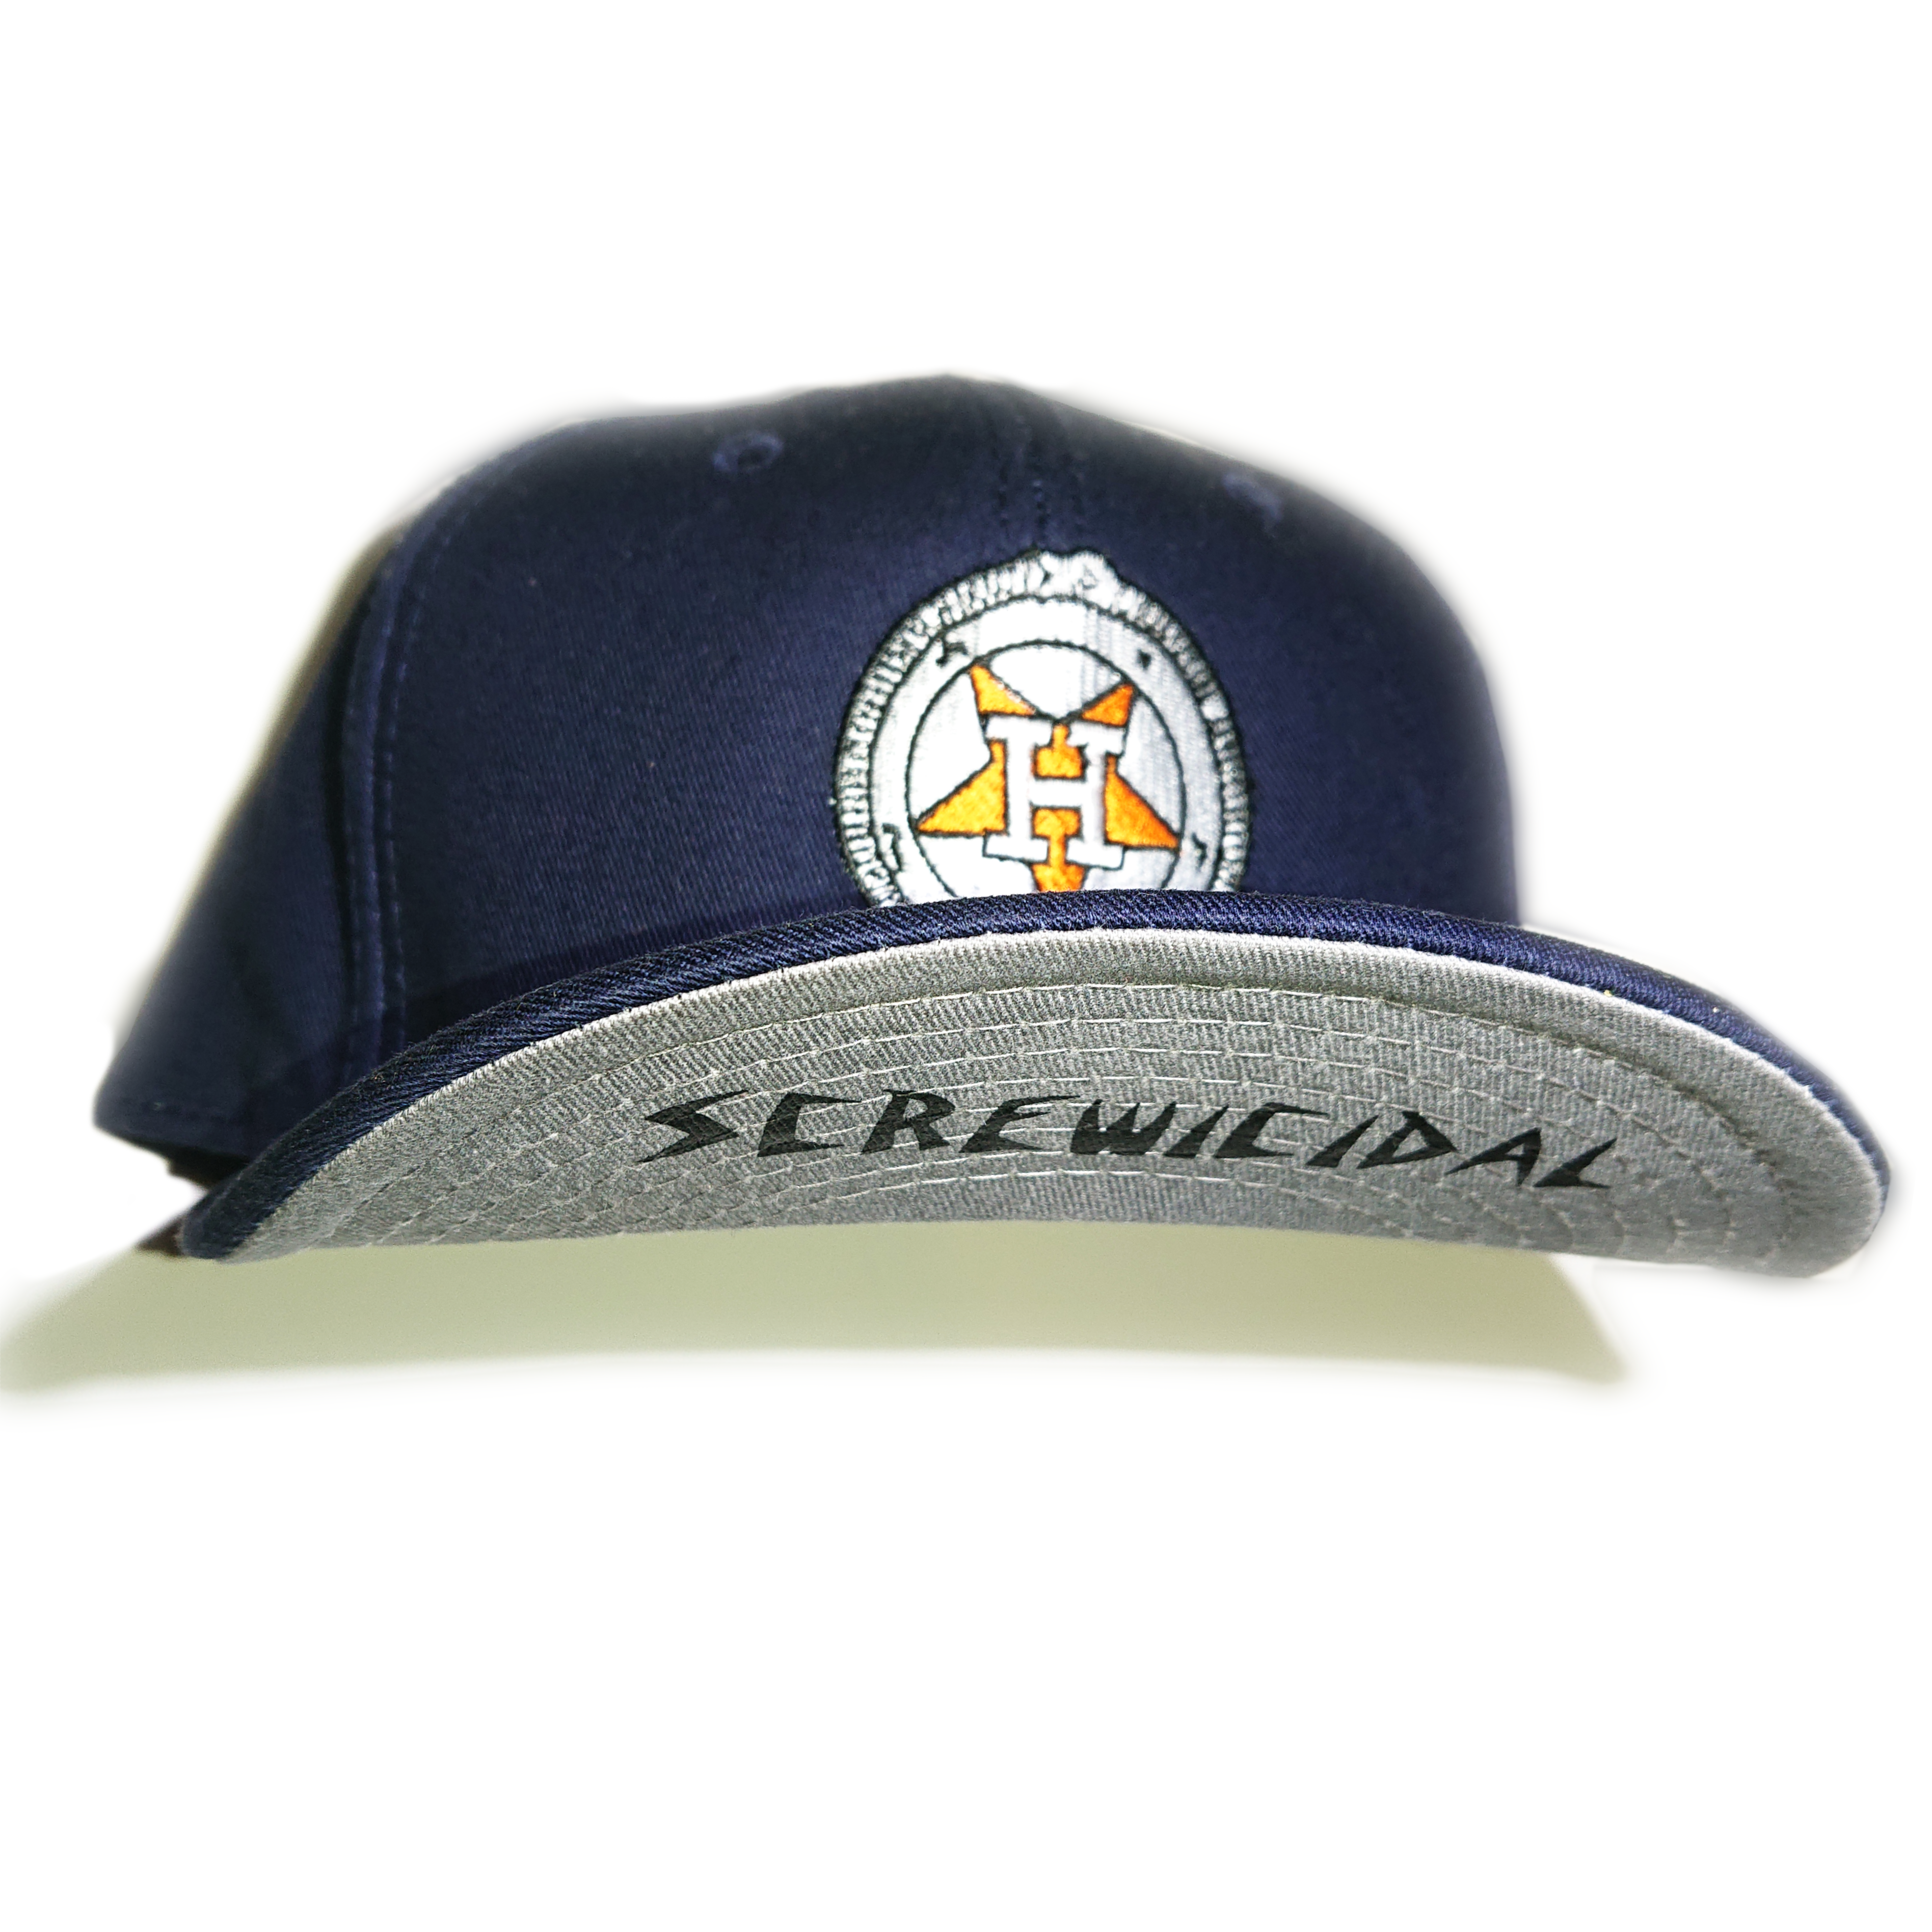 Hometown Curse snapback cap